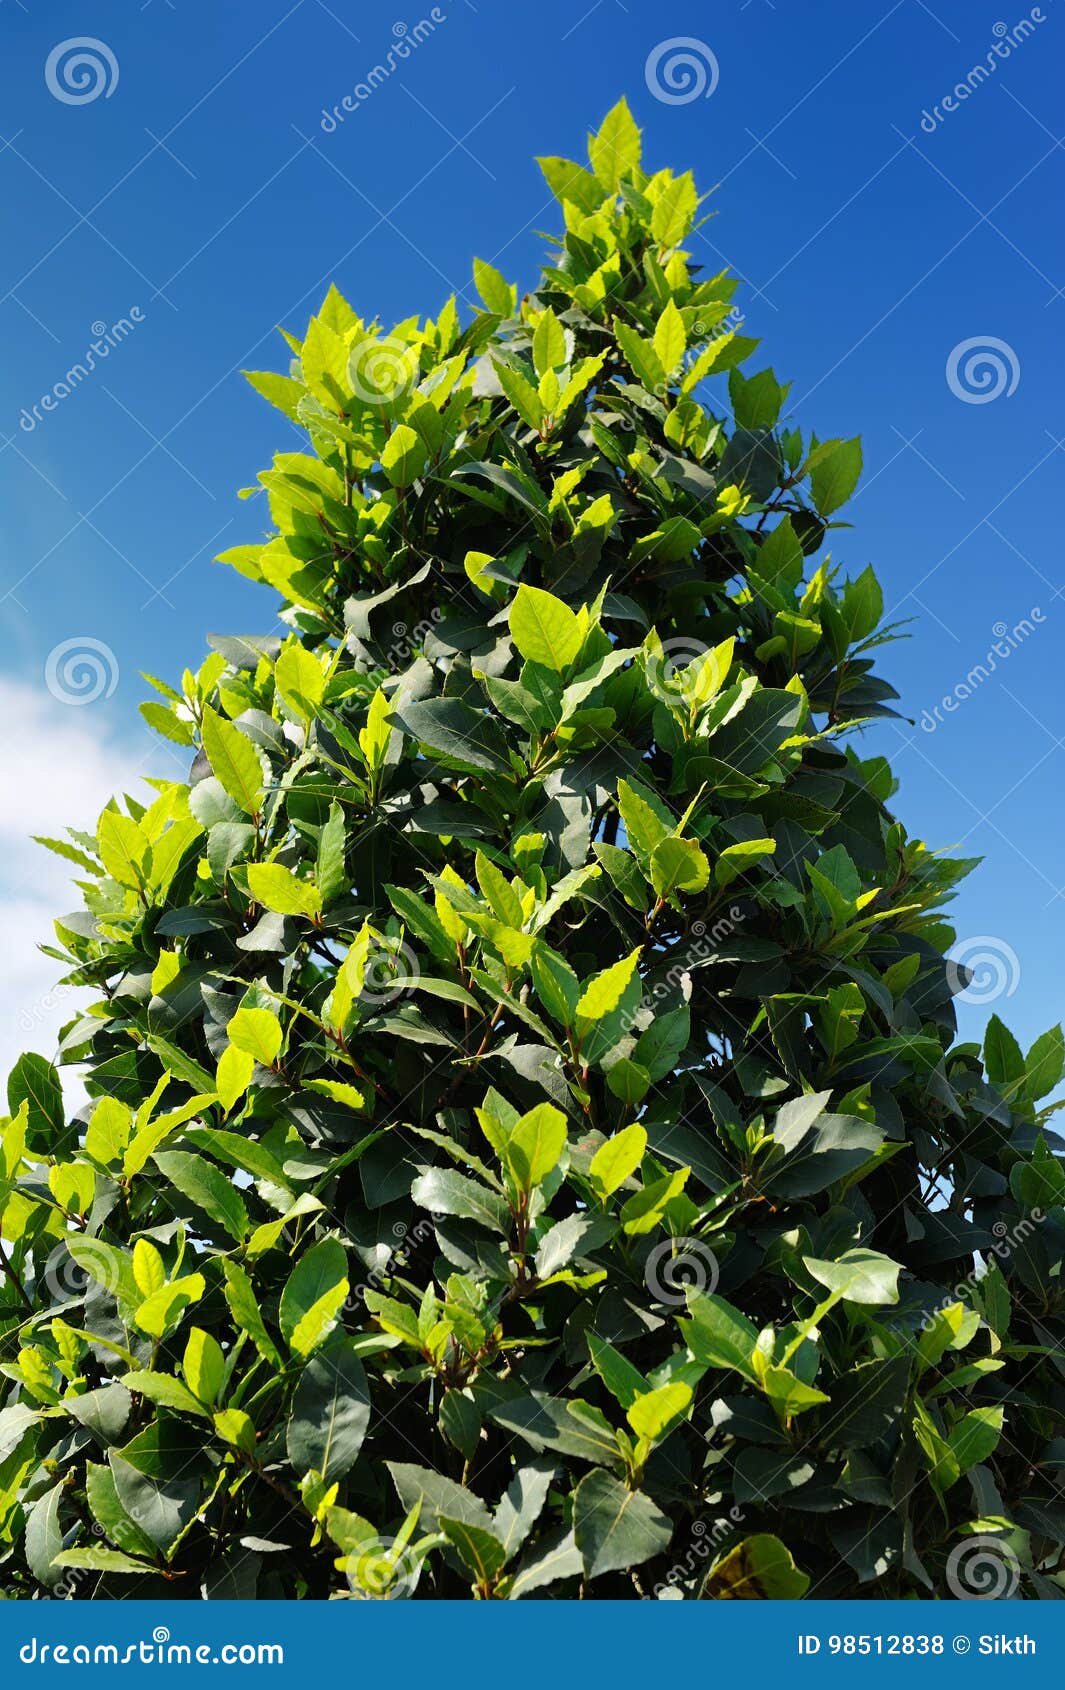 bay laurel laurus nobilis tree